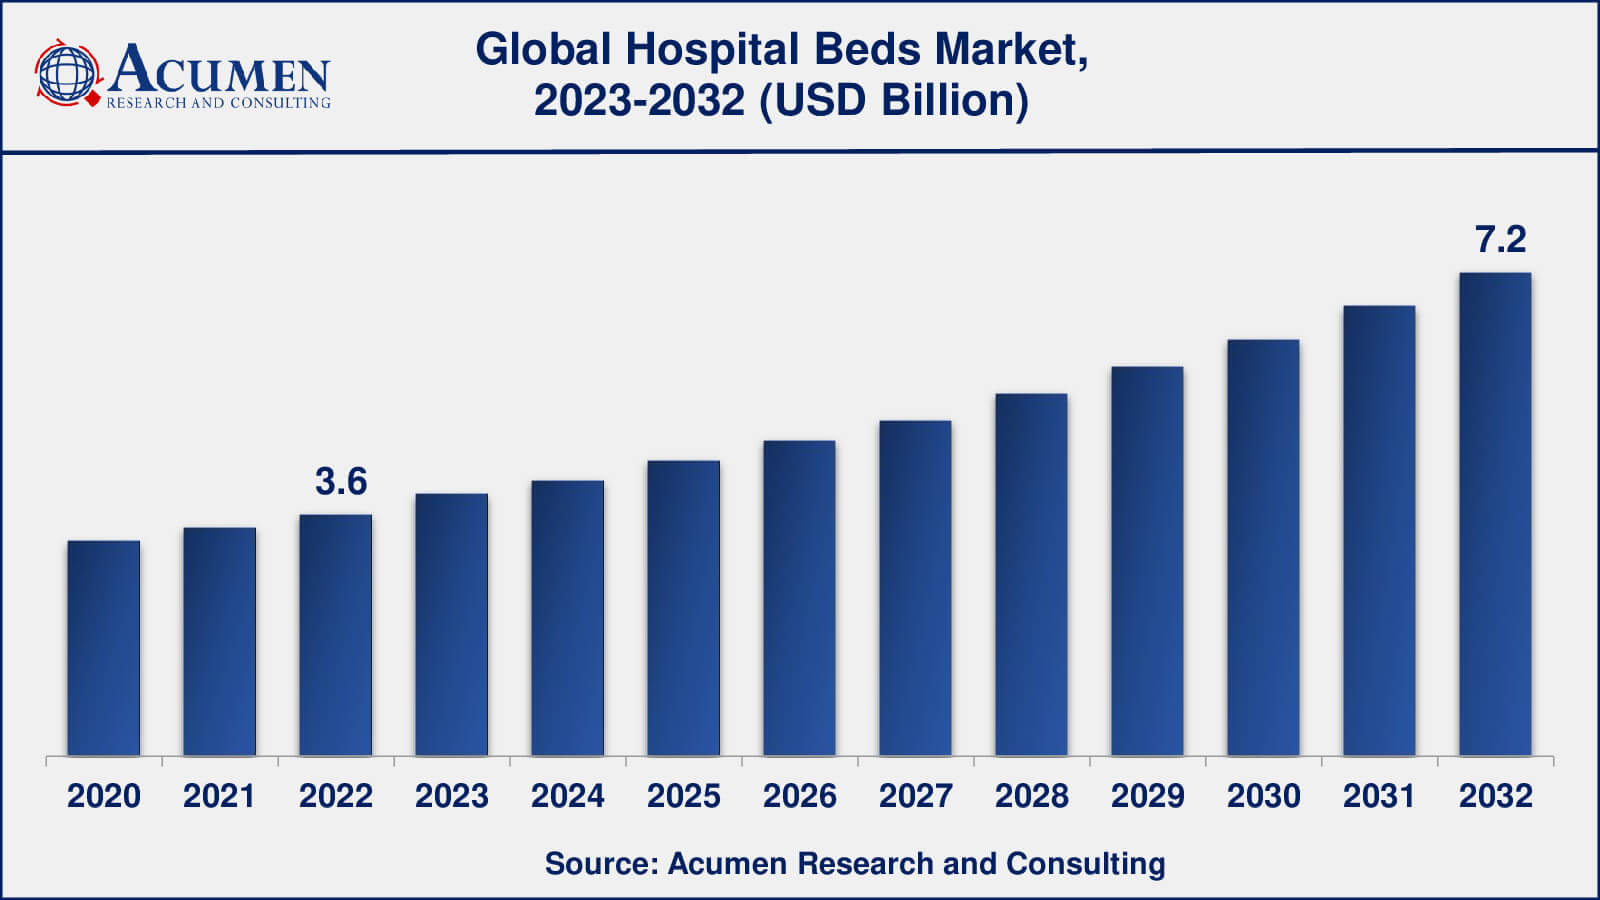 Global Hospital Beds Market Dynamics